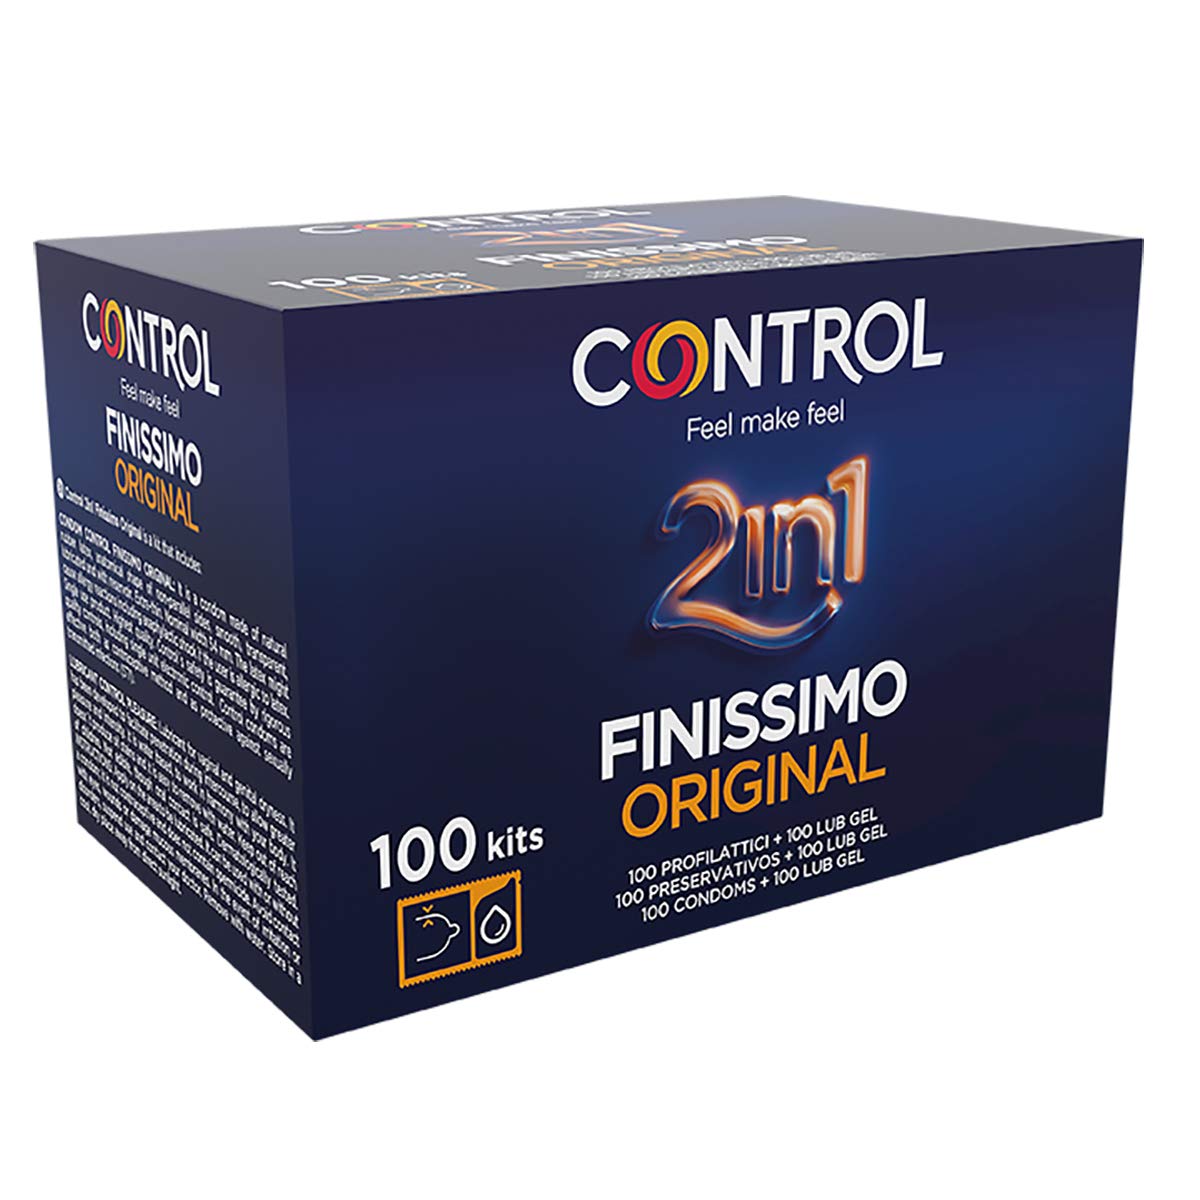 Control 2 in 1 Super feine Original Kondome 0,05 mm + Gleitgel - 100 Stück Prophylaxe + 100 Einzeldosisbeutel